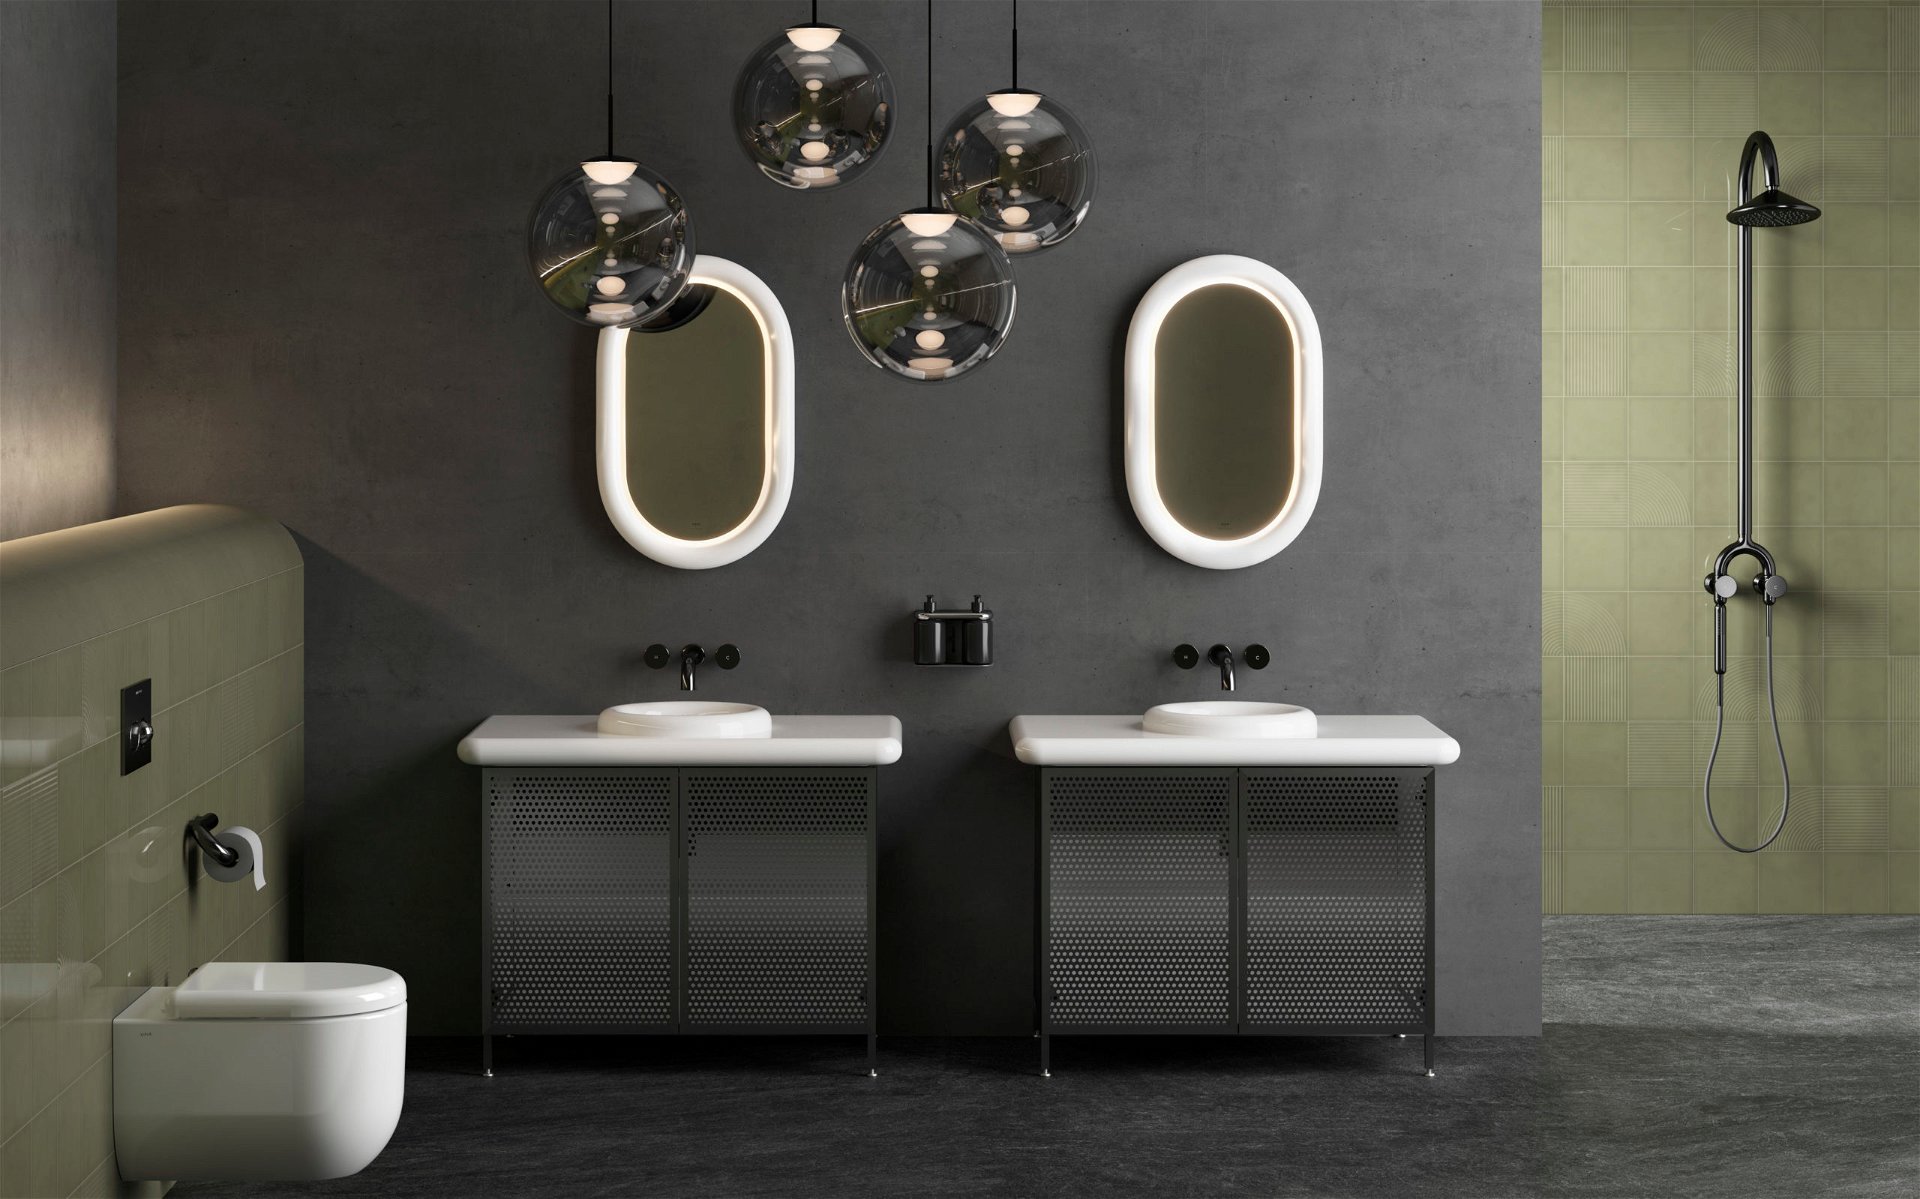 Tom Dixon bathroom design for VitrA wins Wallpaper* award